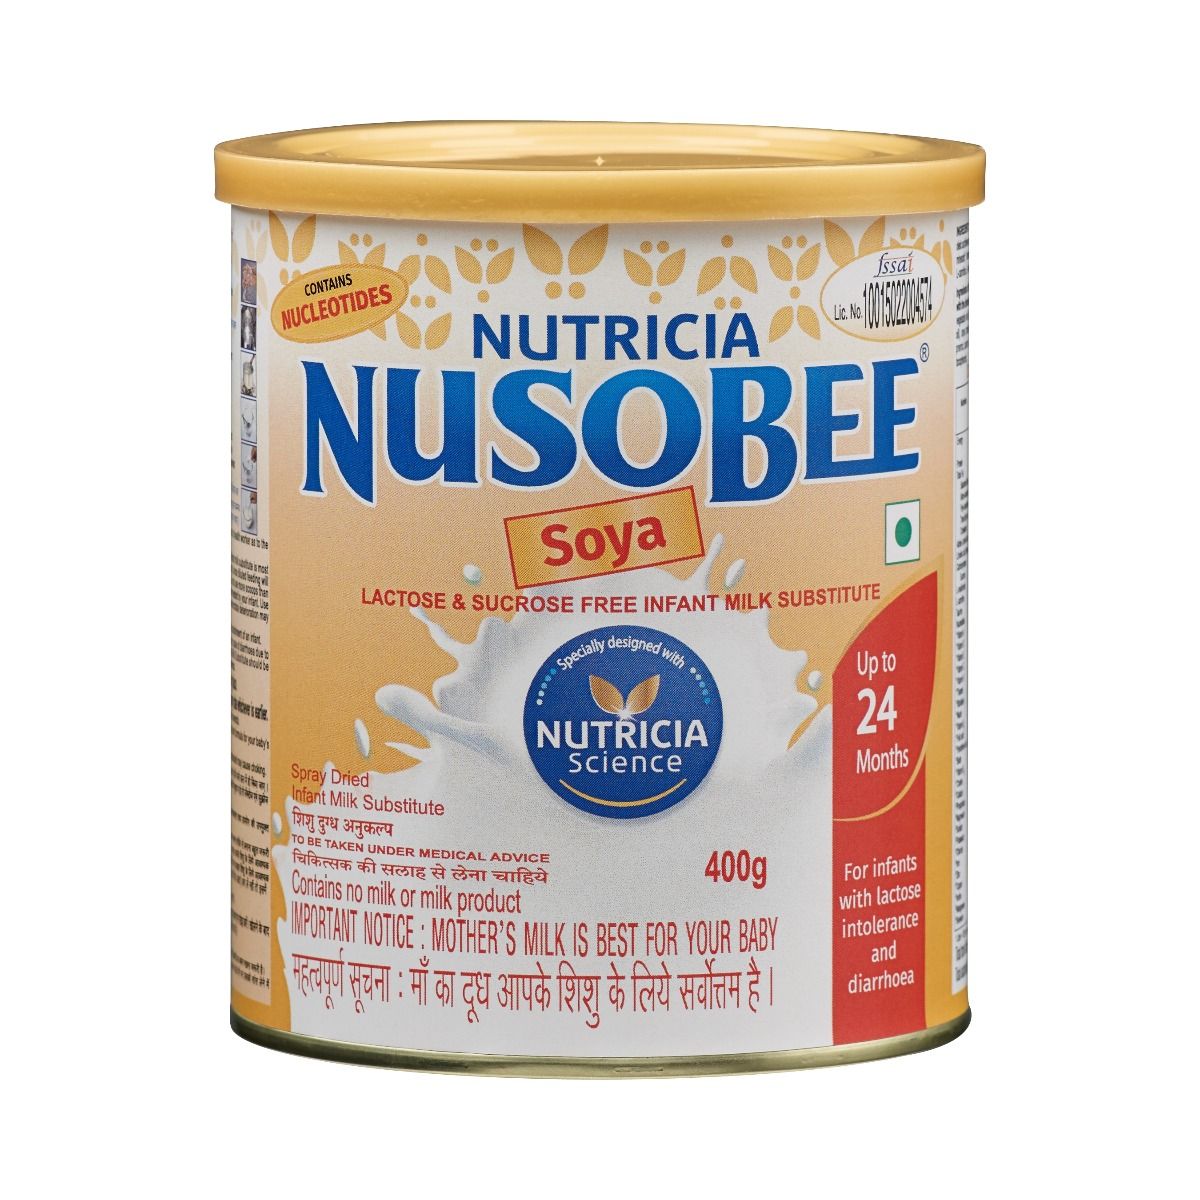 Buy Nutrica Nusobee Soya Infant Formula, 400 gm Tin Online